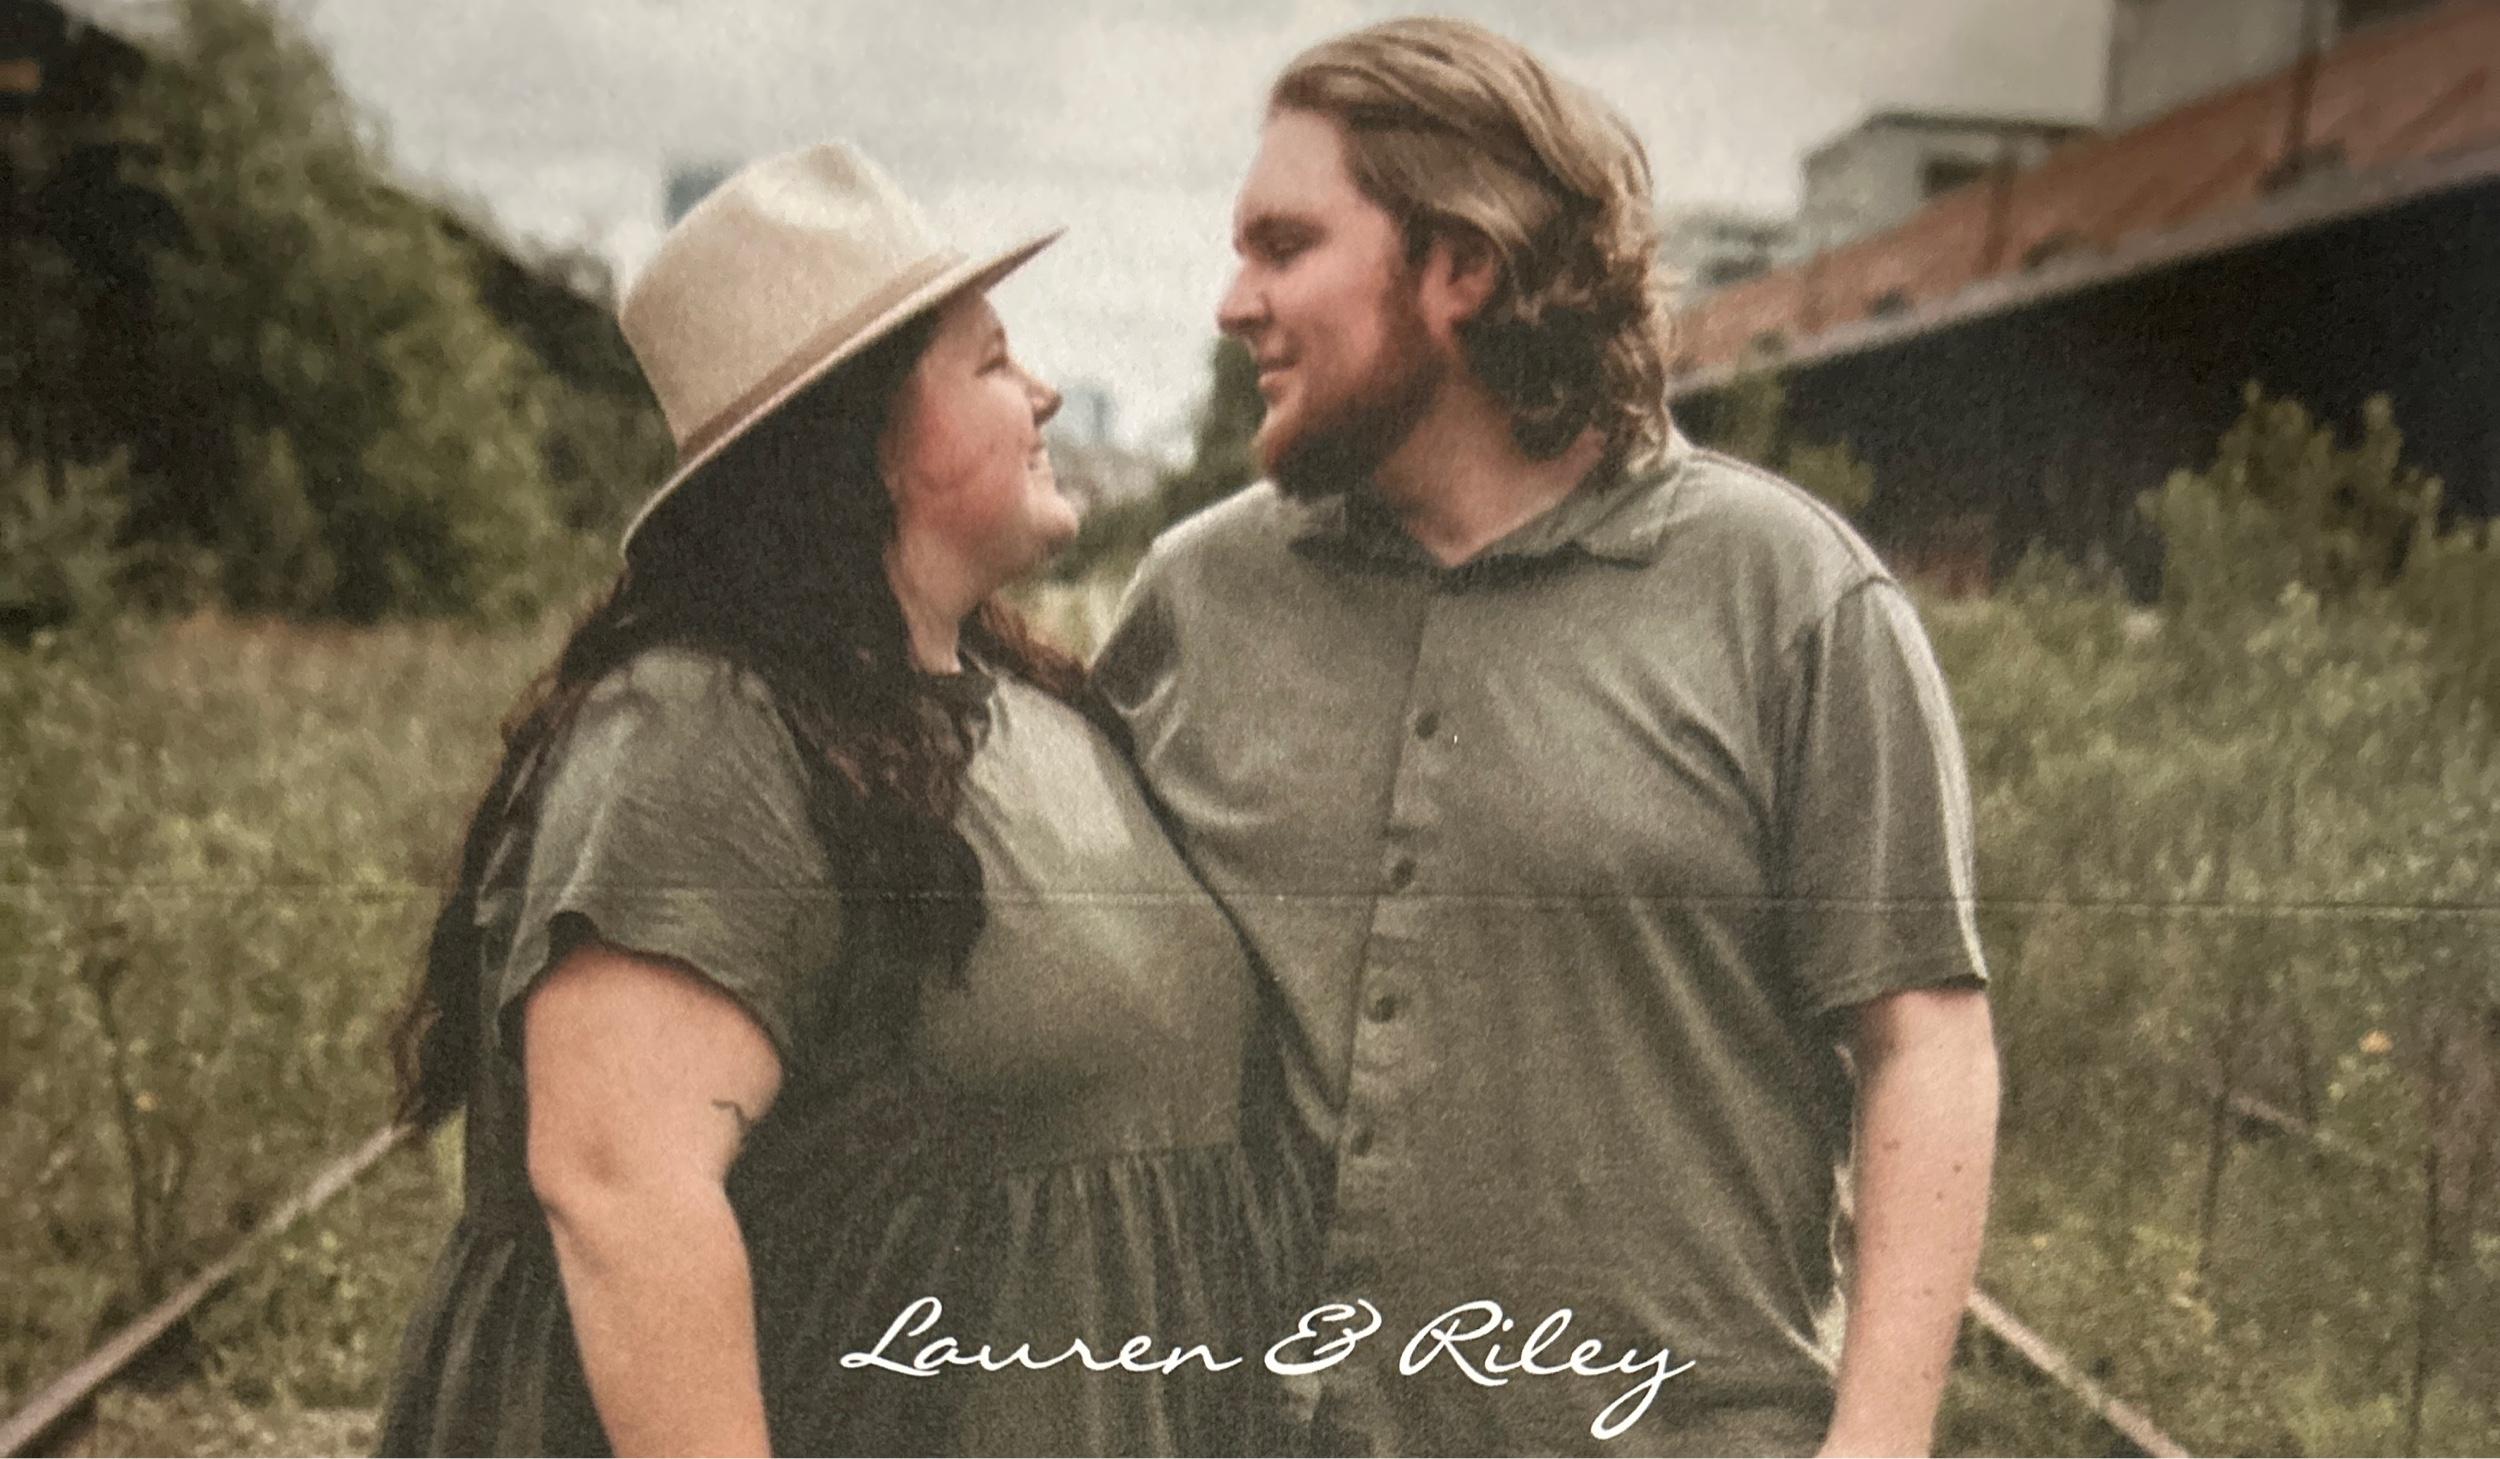 The Wedding Website of Lauren Bruce and Riley Russo